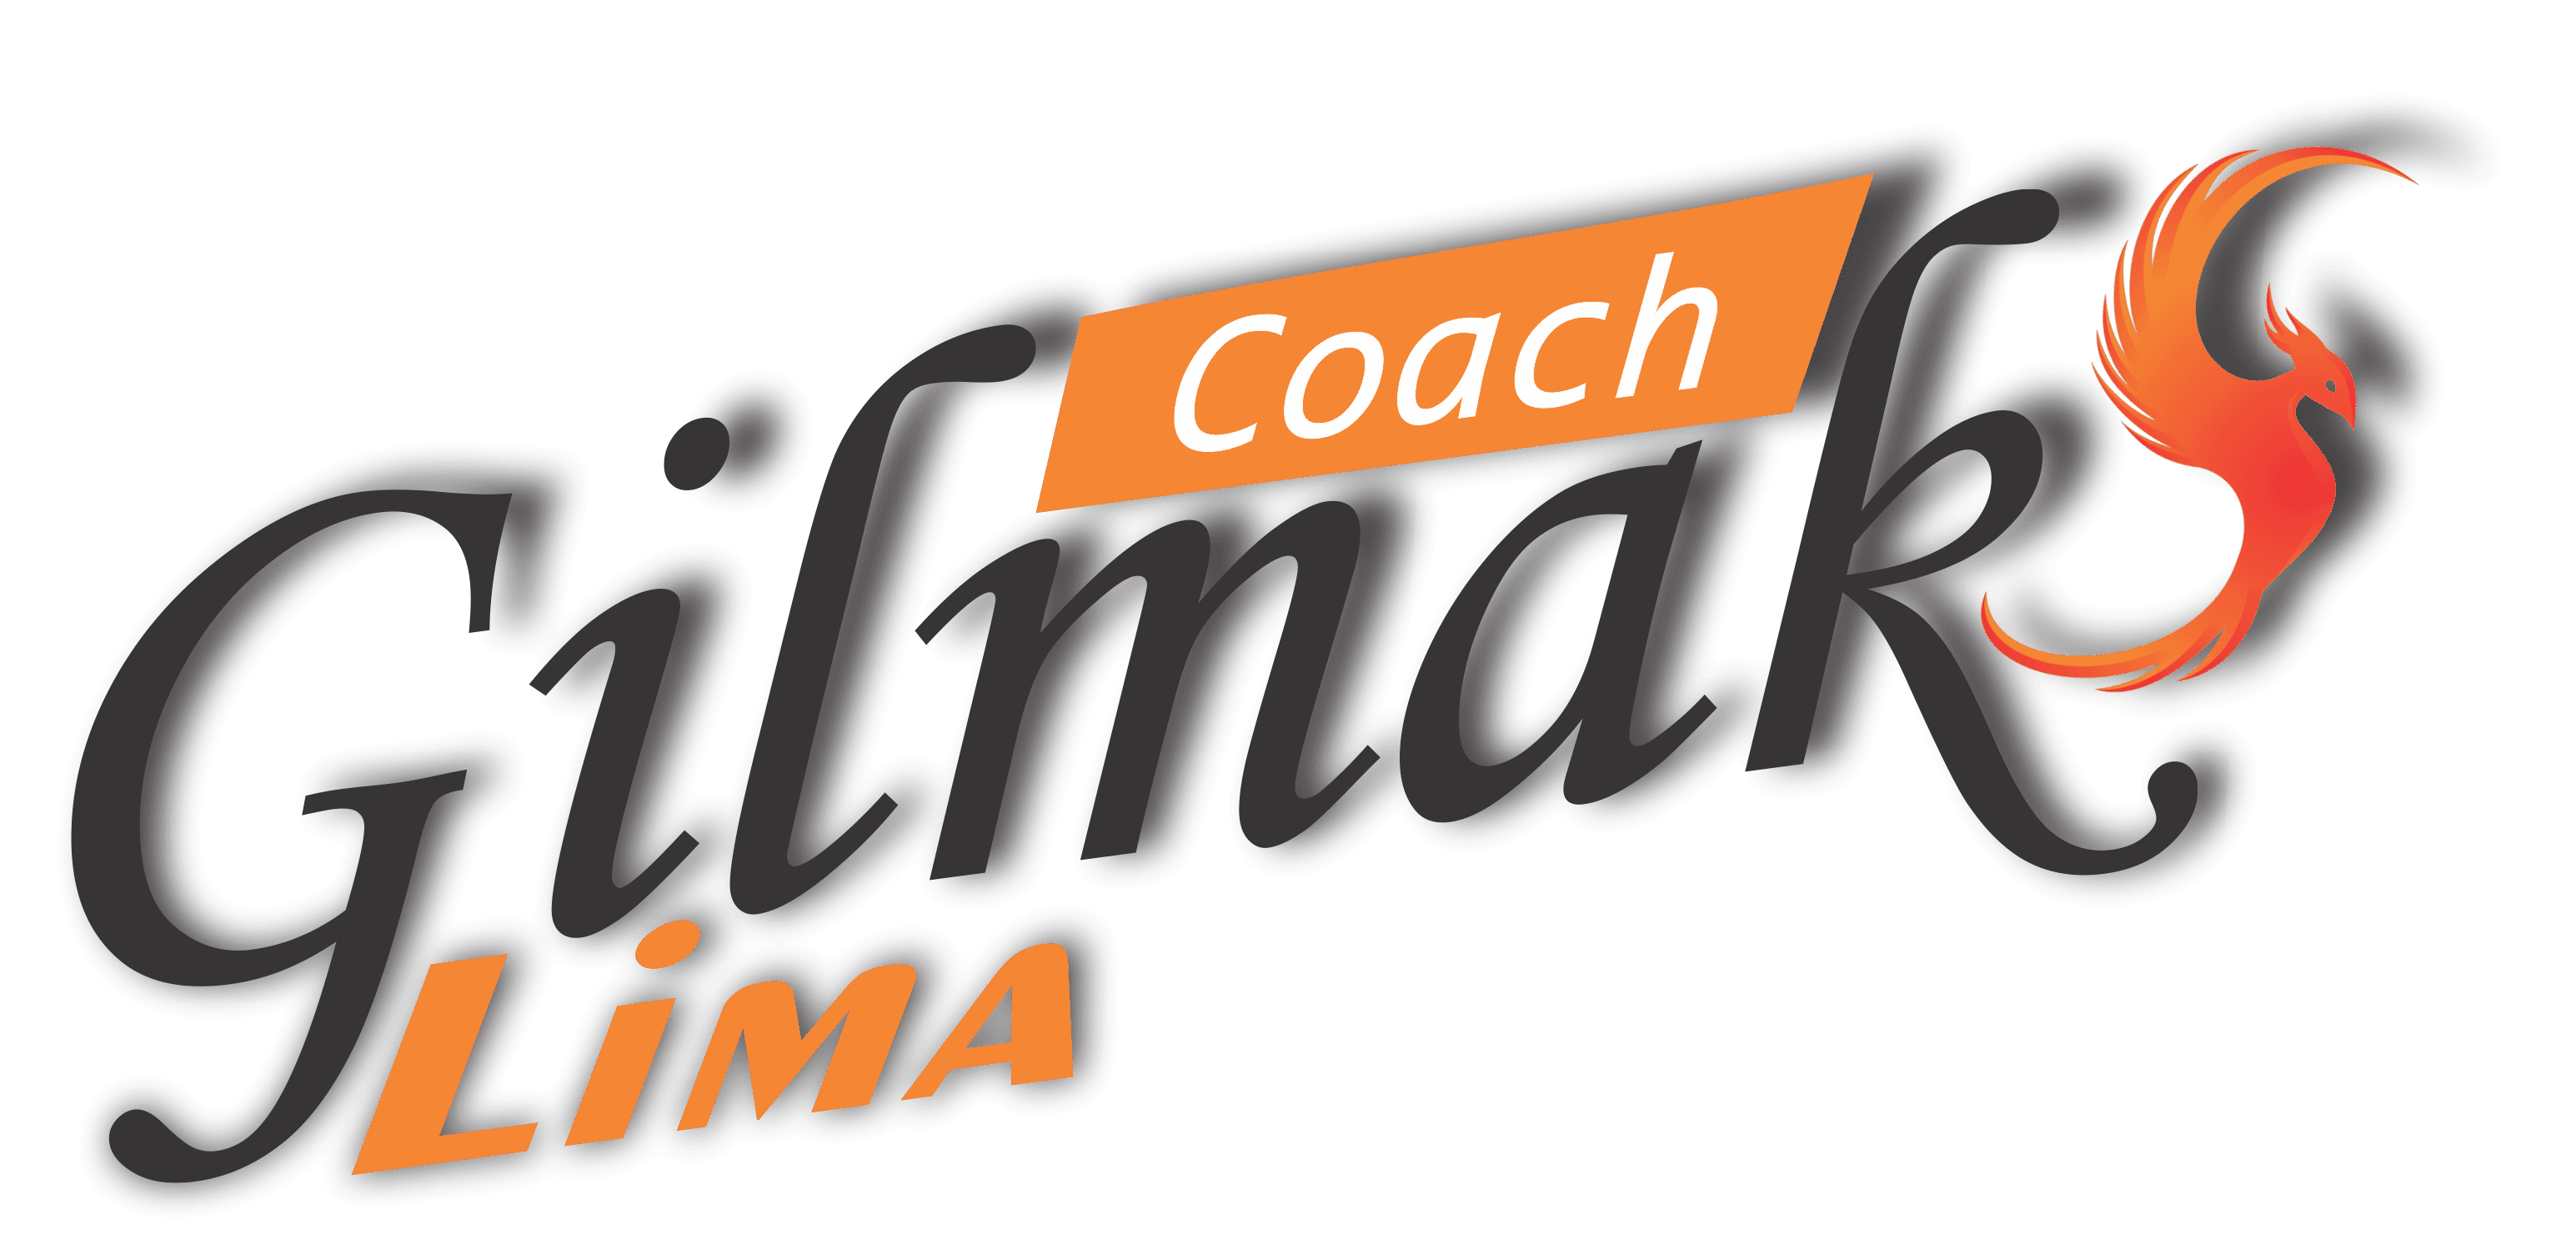 Coach Gilmaks Lima